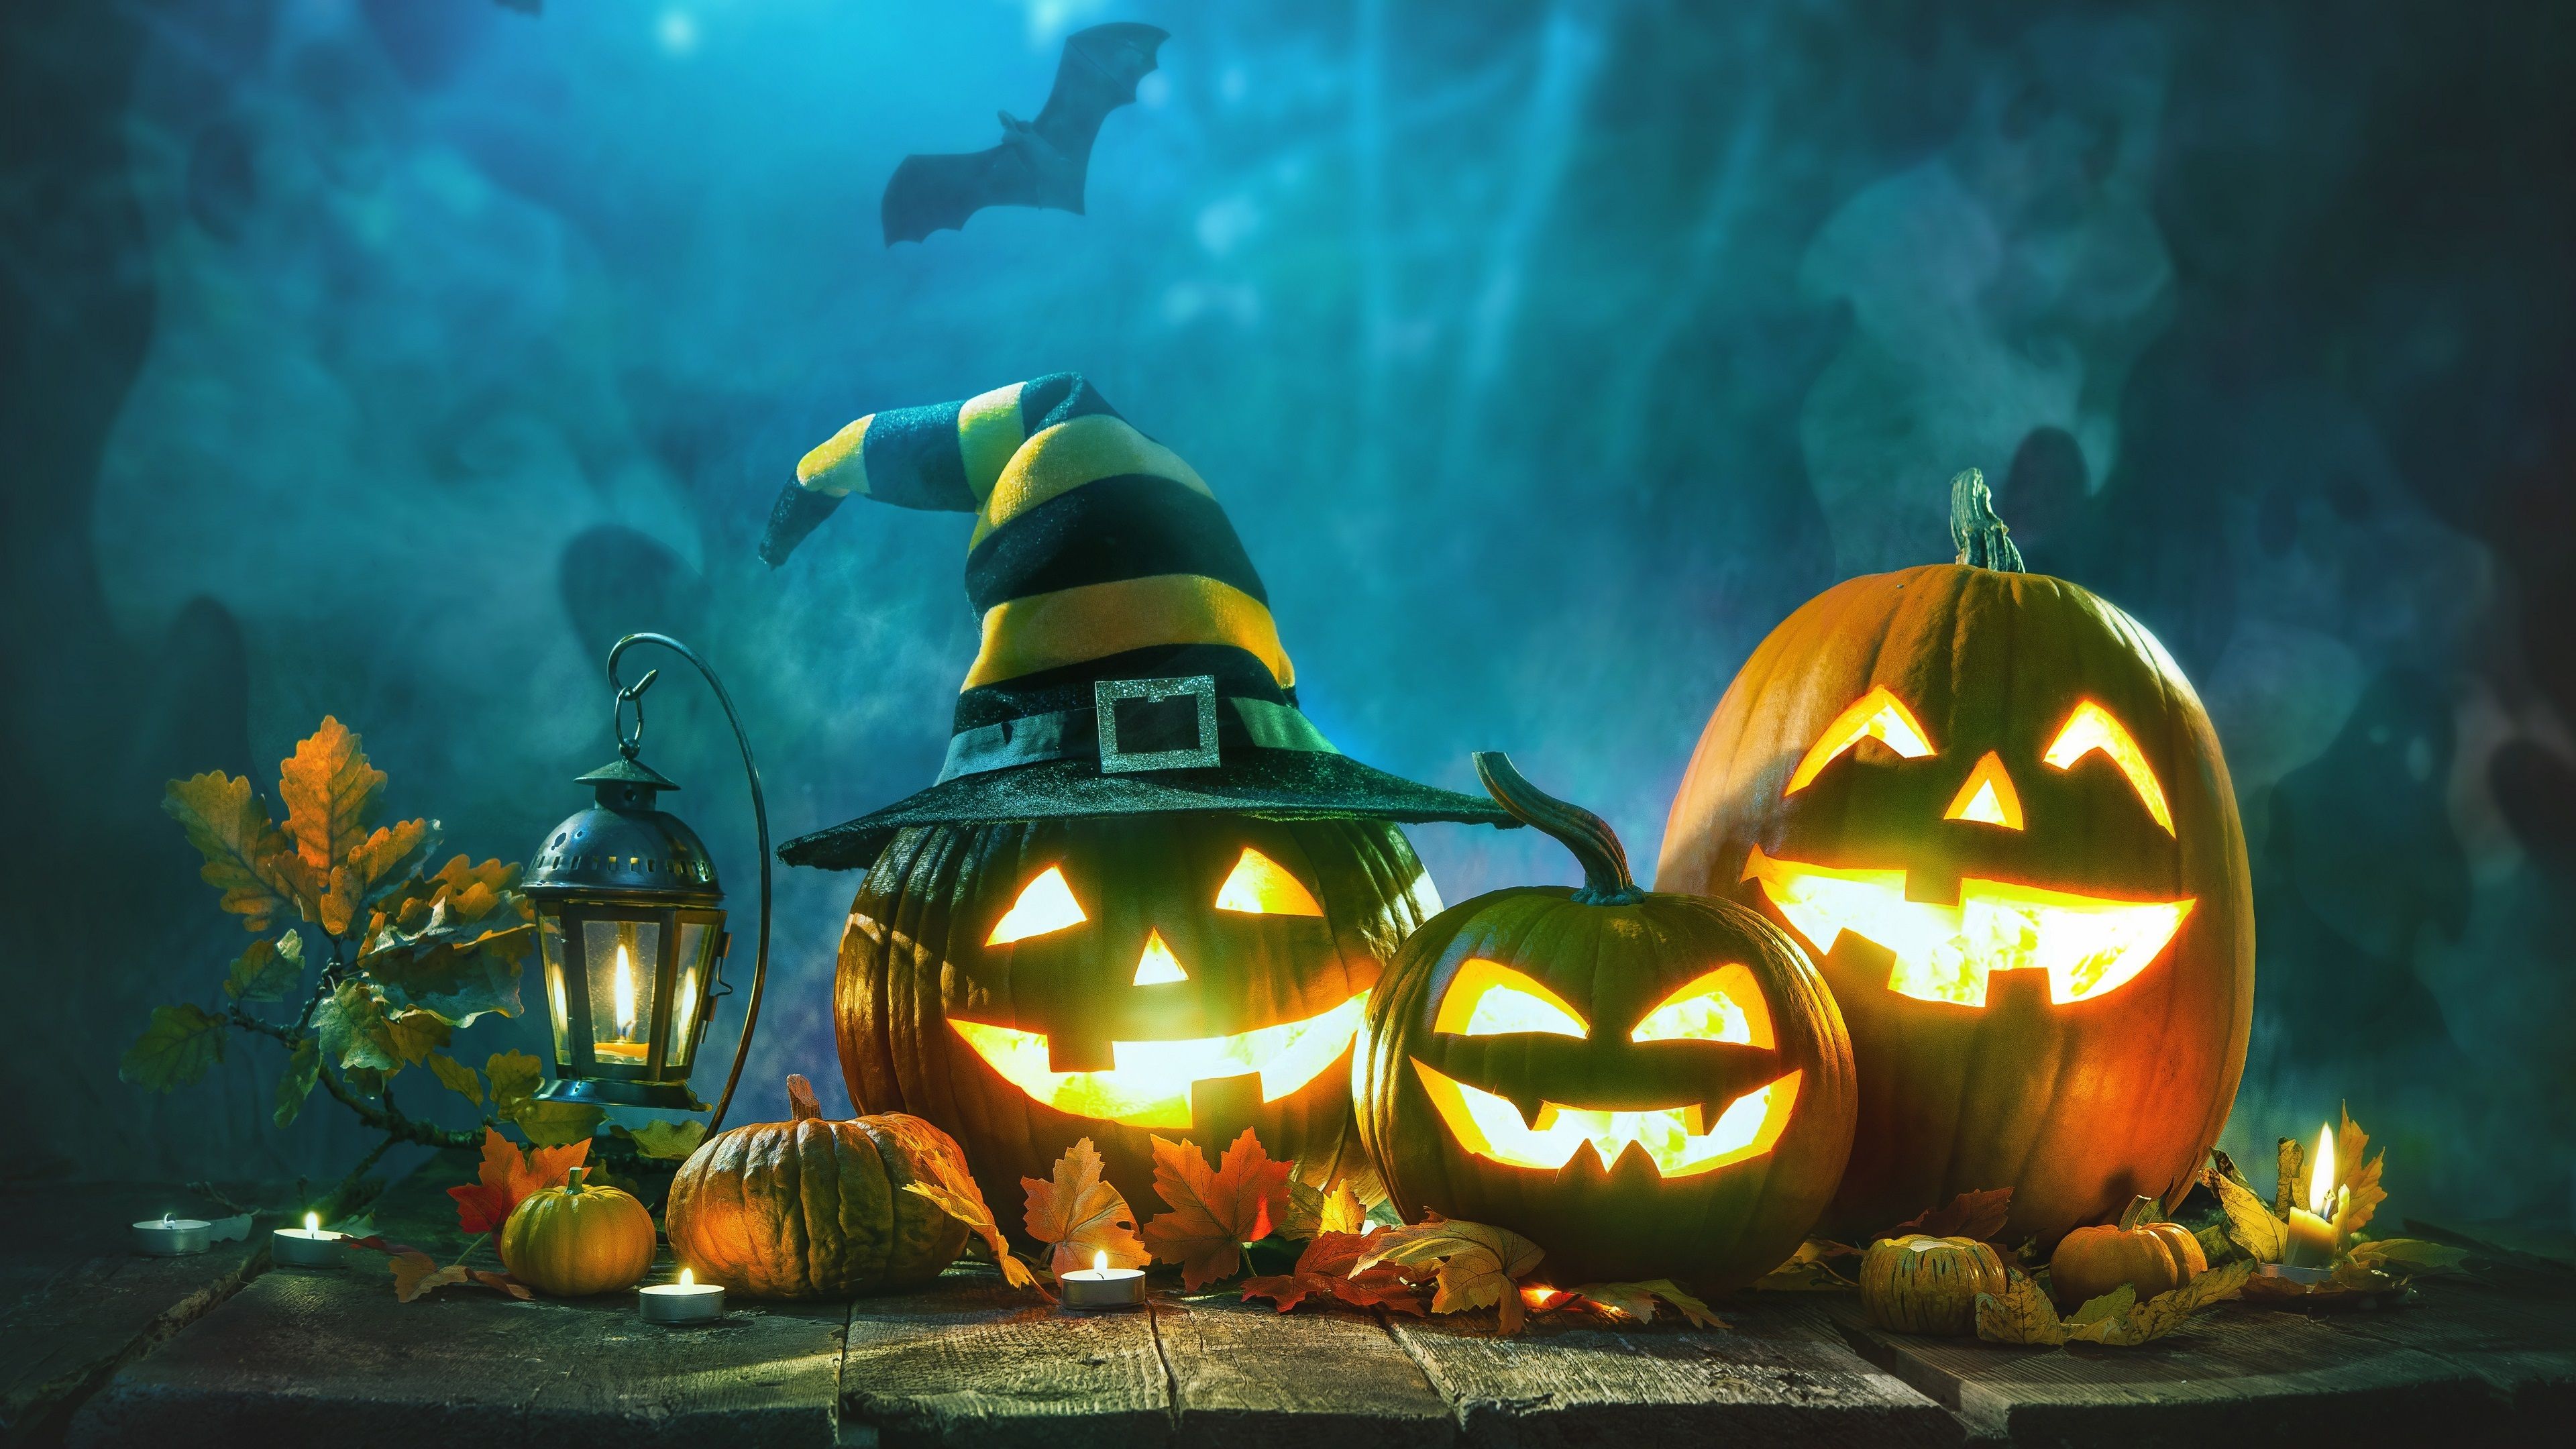 Wallpapers Halloween, pumpkin lamp, night 3840x2160 UHD 4K Picture, Image